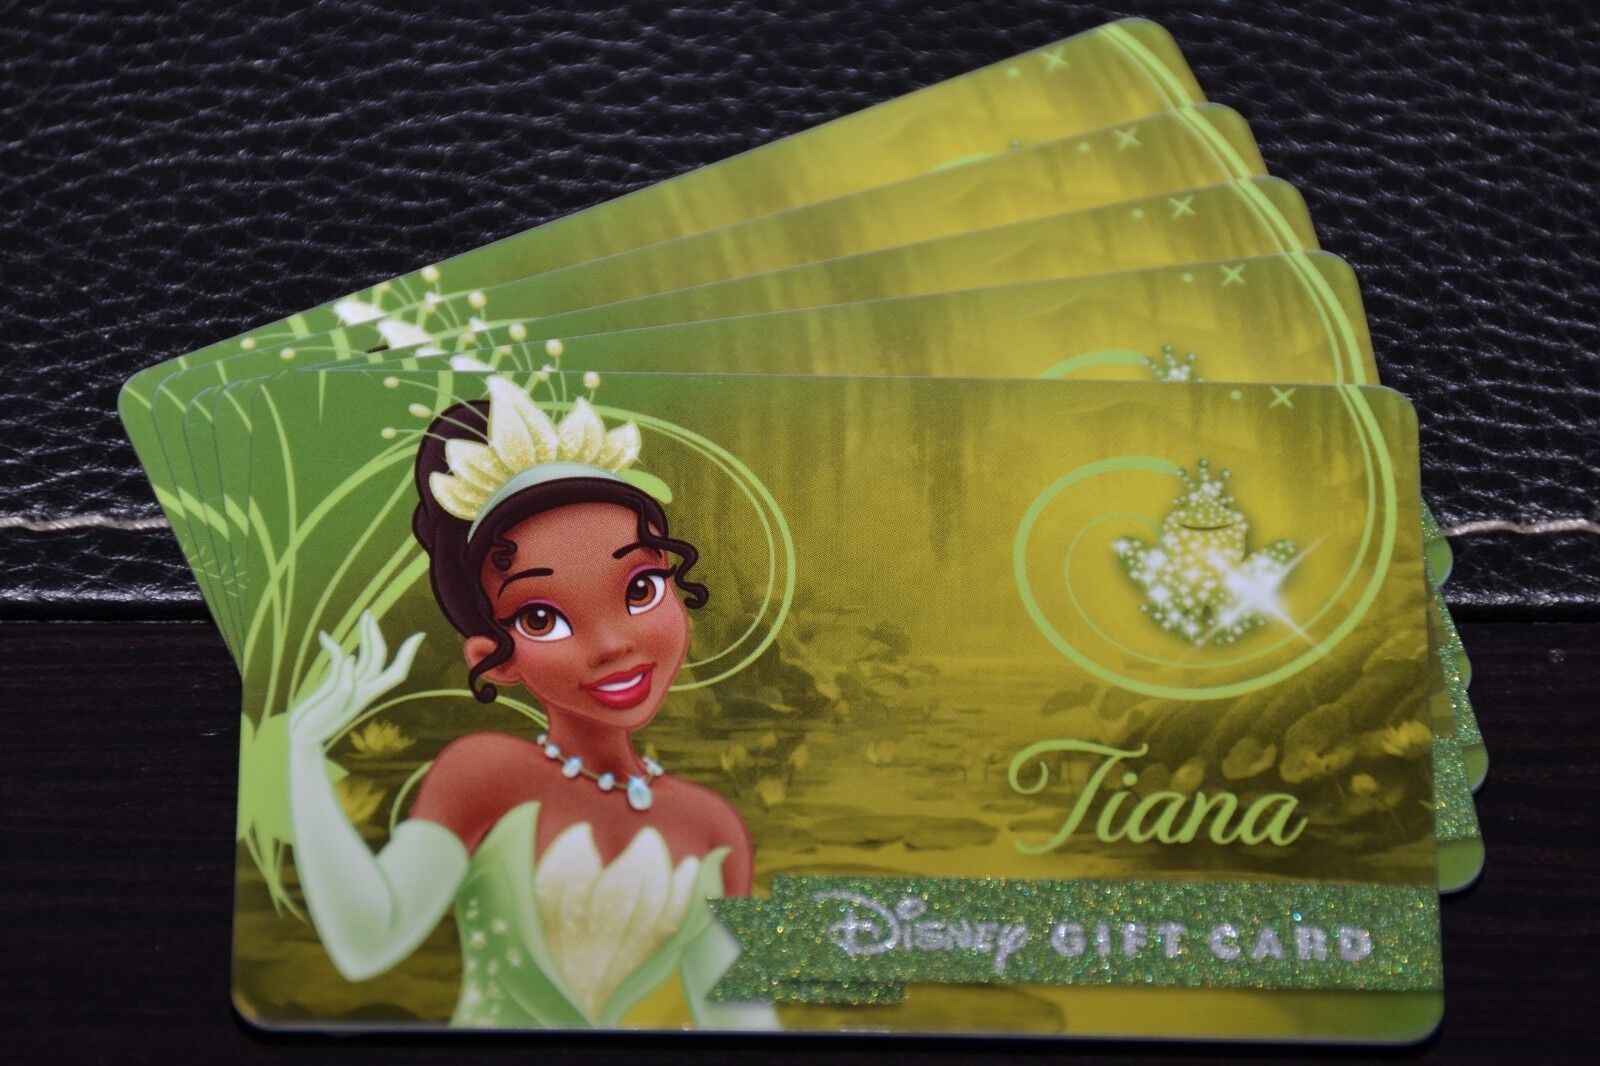 NEW 2016 Disney Gift Card A Royal Debut Tiana Design Celebrates Princesses